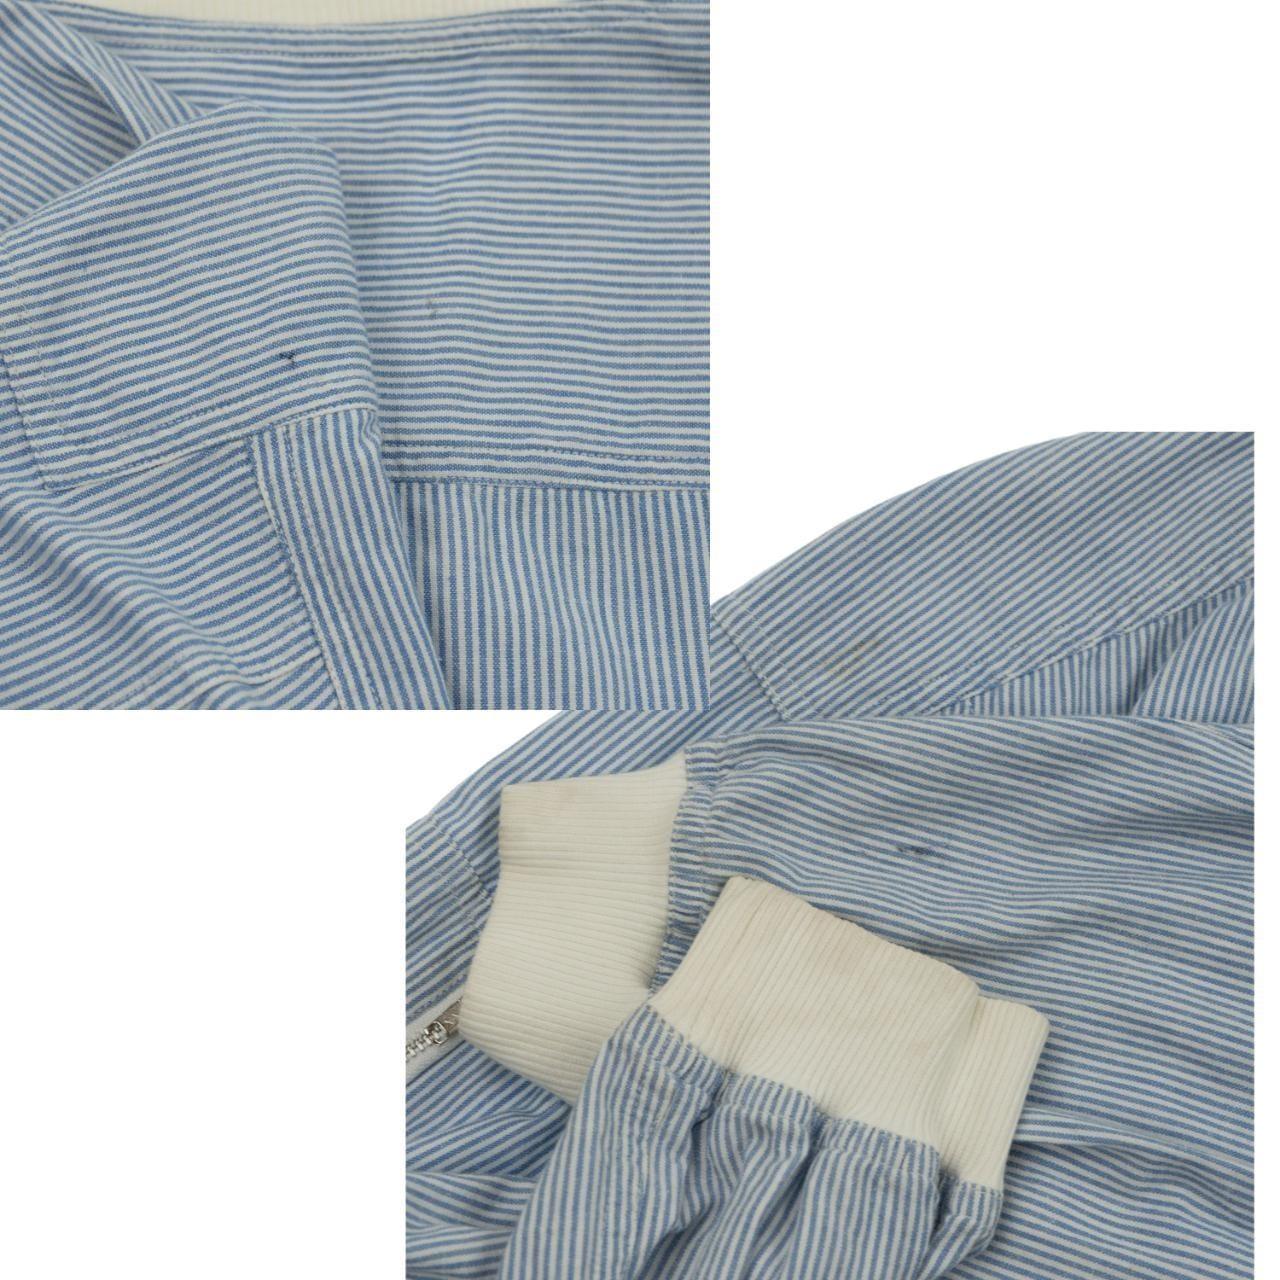 Vintage Issey Miyake Sport Striped Zip Up Jacket Size M - Known Source